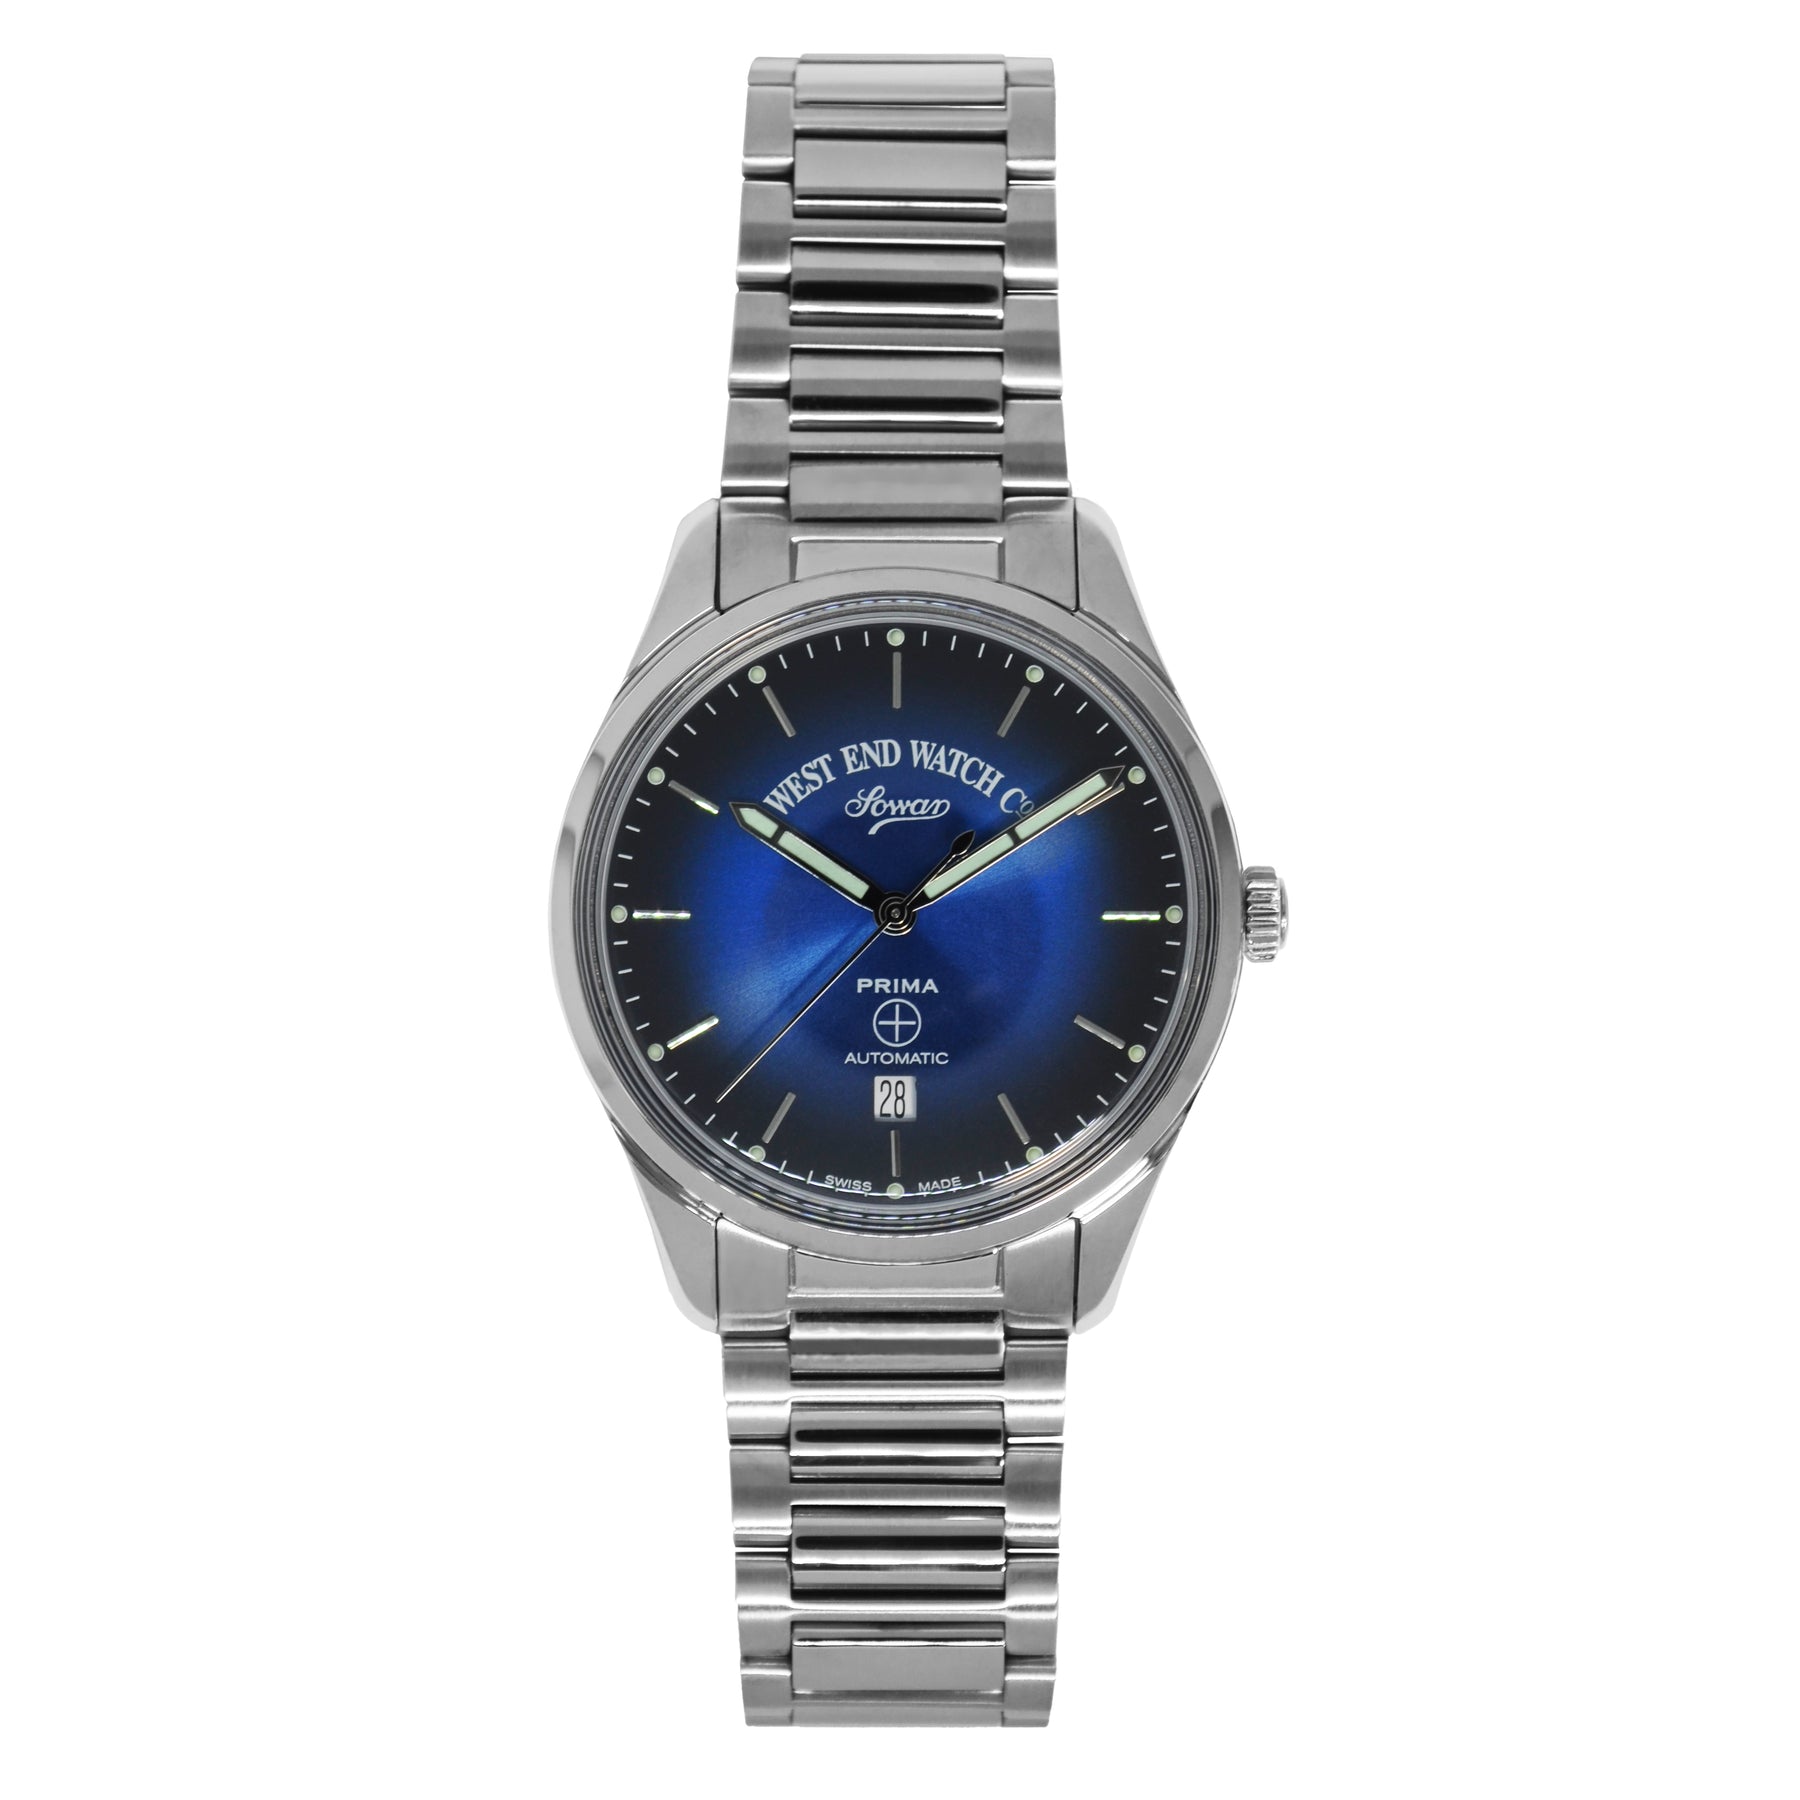 West End Watch Co., Sowar Steel Blue Dial, Analog Watch,